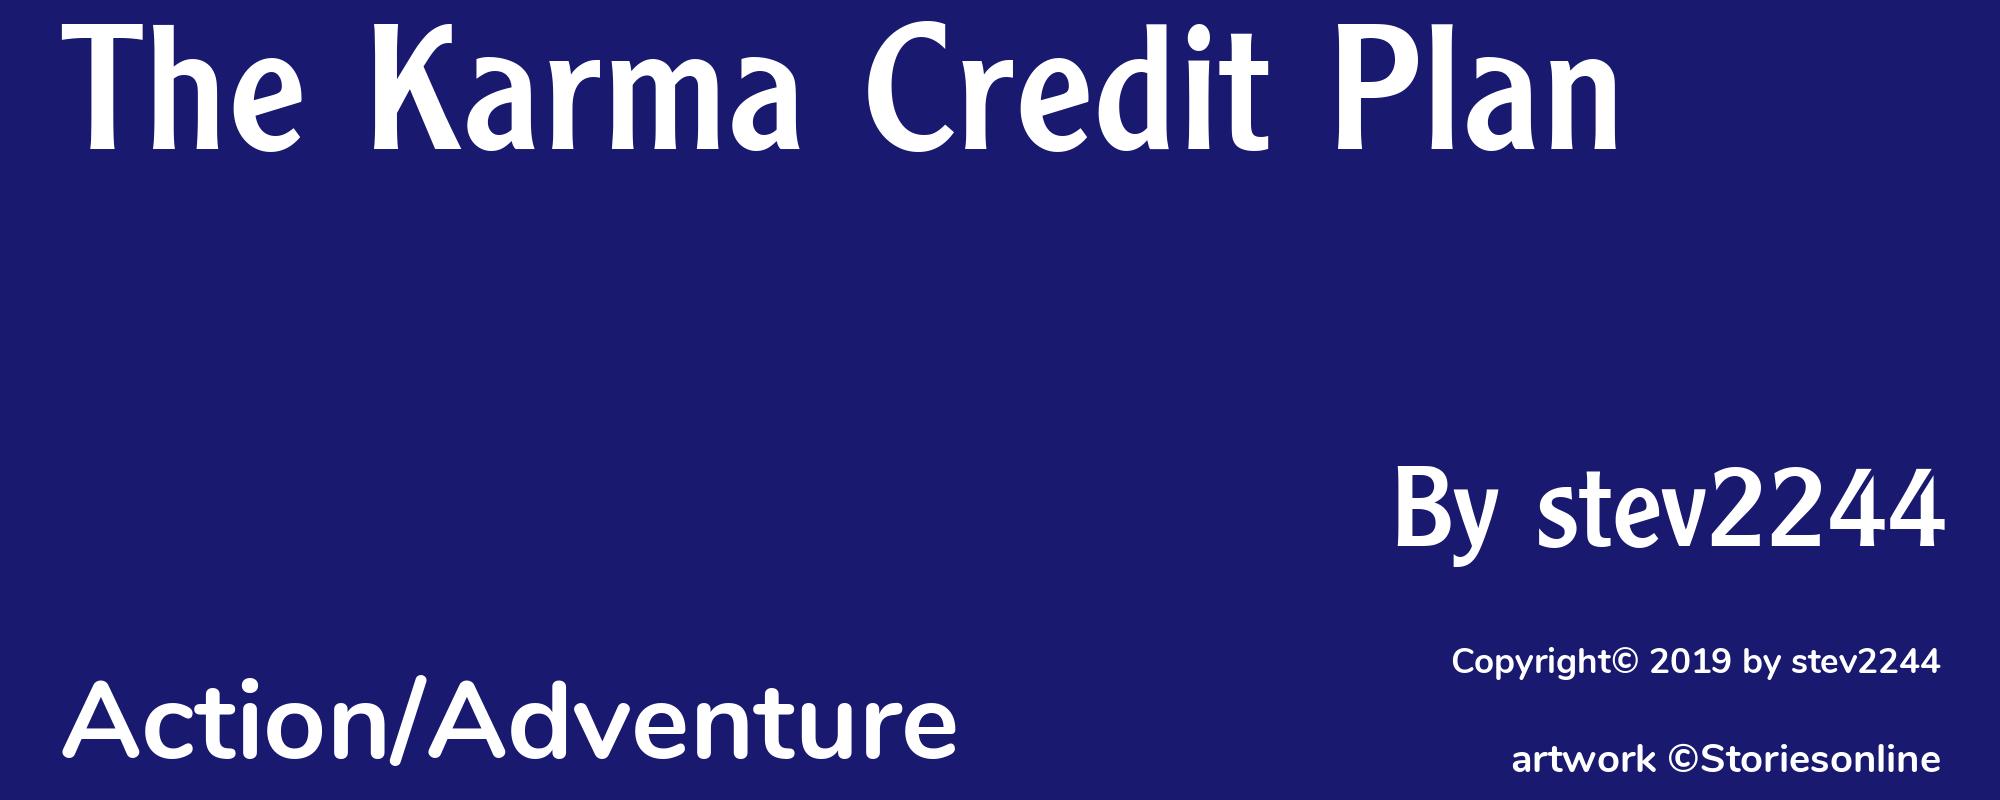 The Karma Credit Plan - Cover